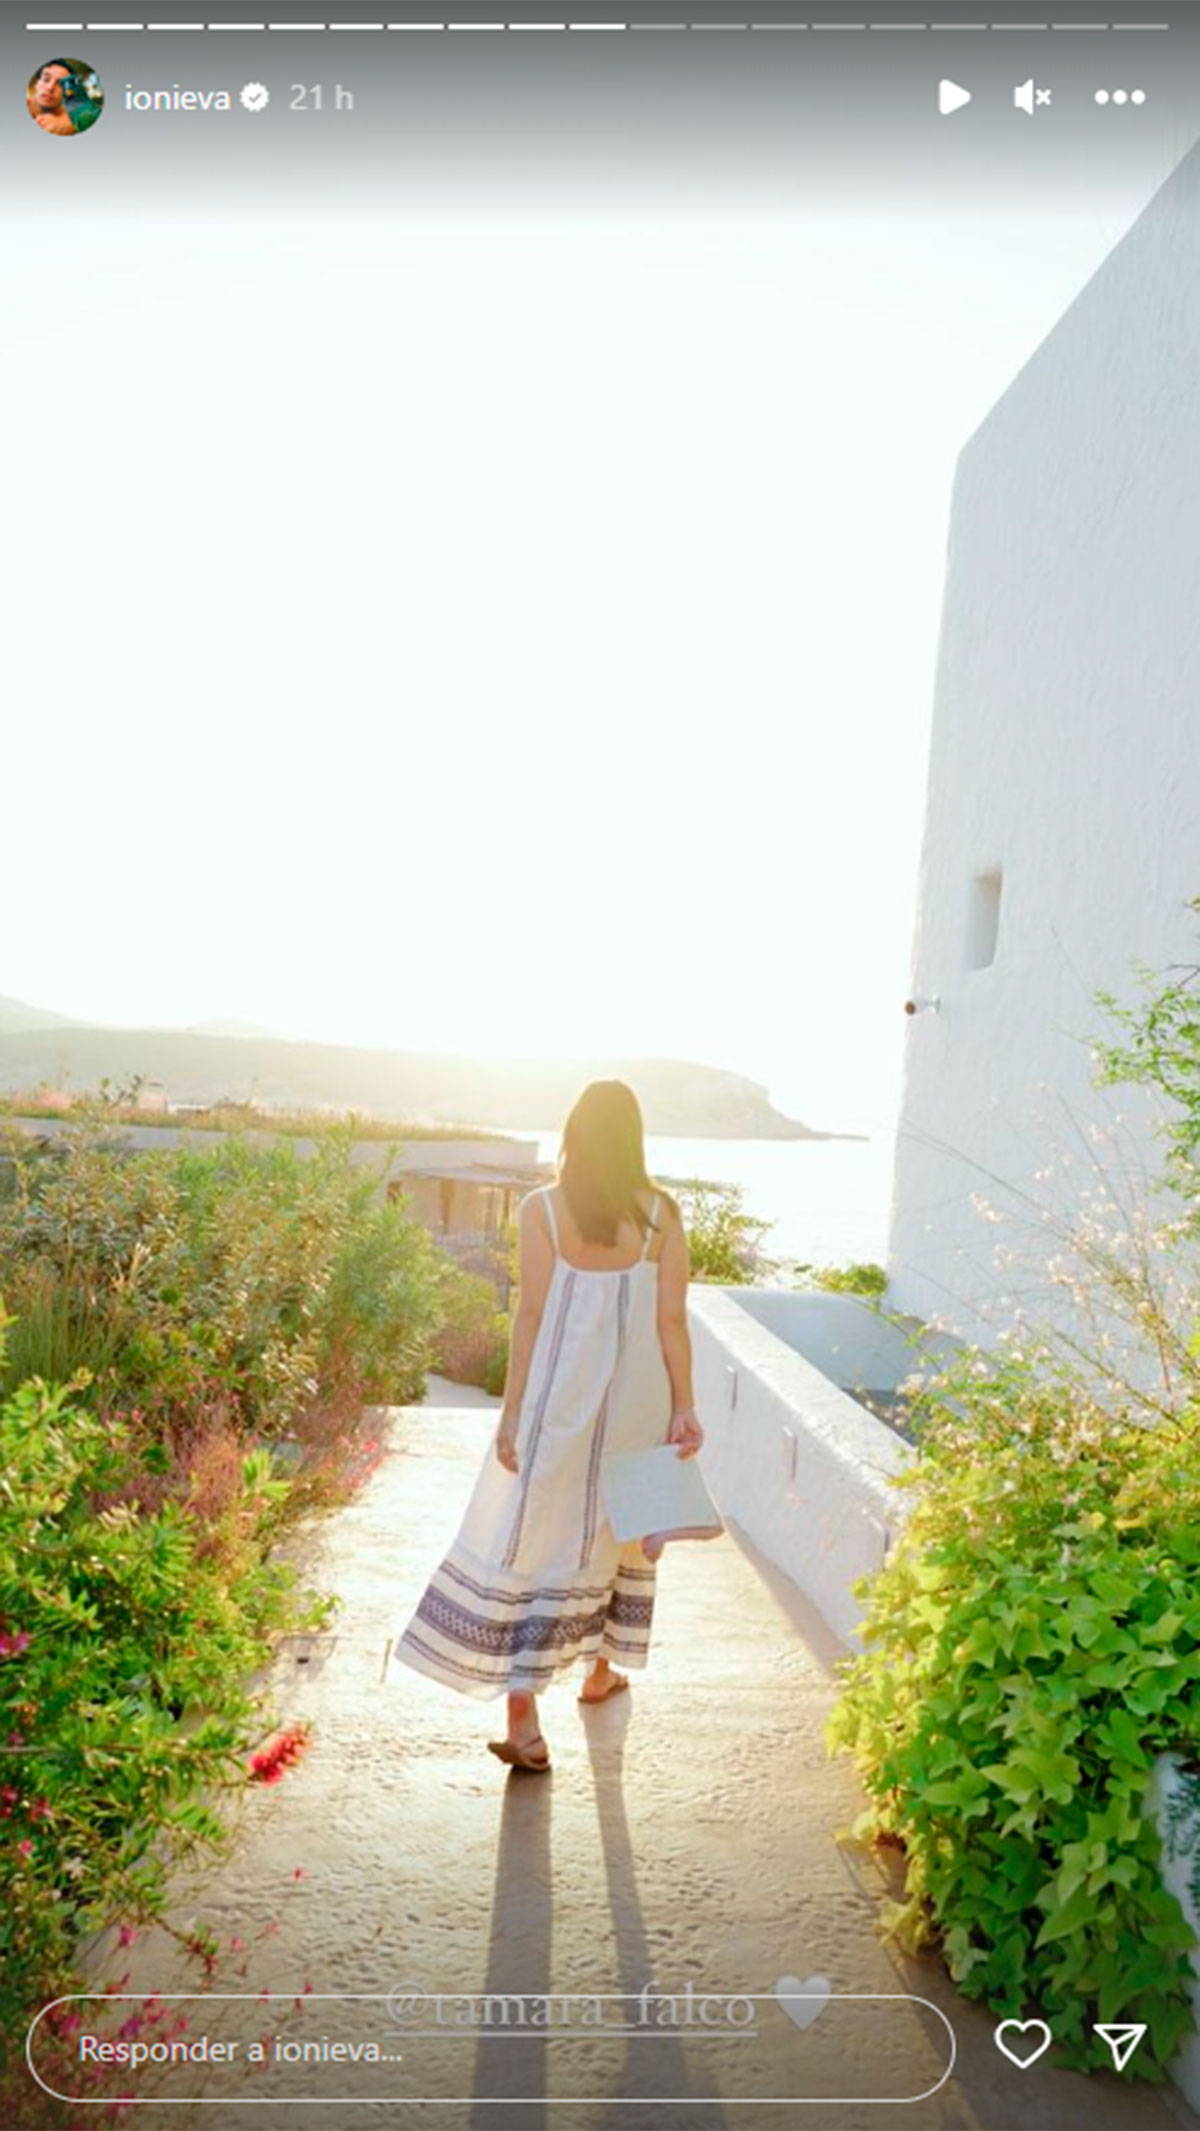 El paseo de Tamara Falcó en el hotel de Ibiza